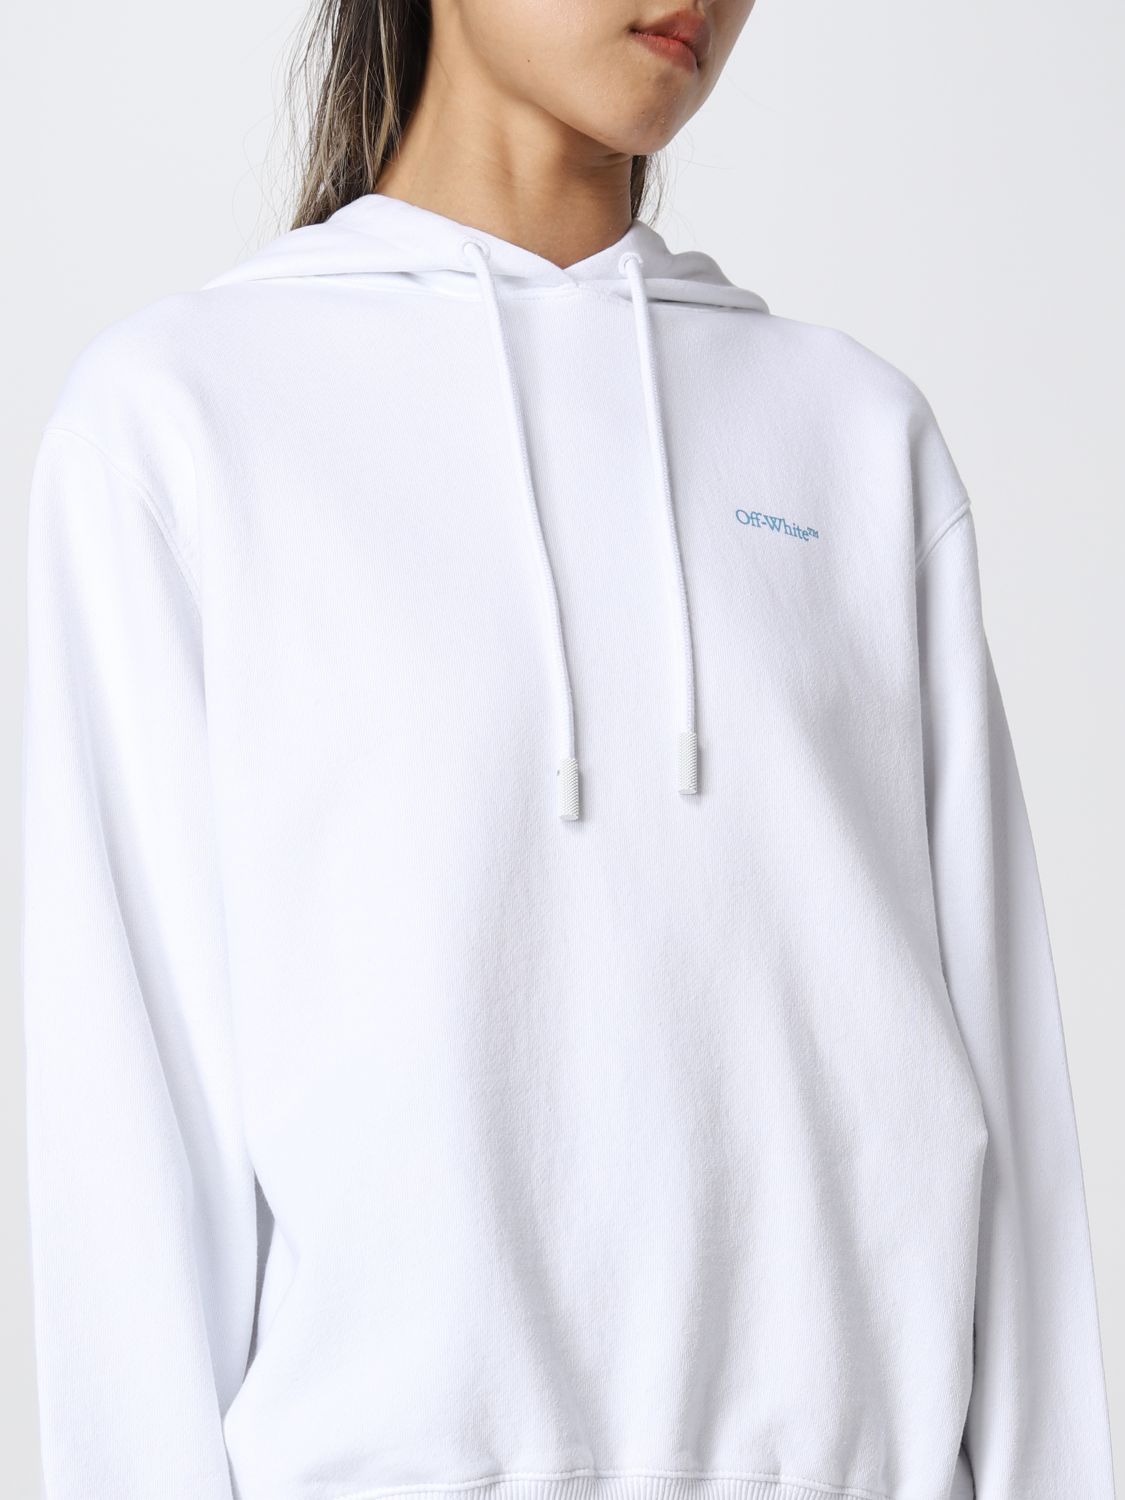 Off-White on Instagram: “Off-White™ multicolour sweater, wrap